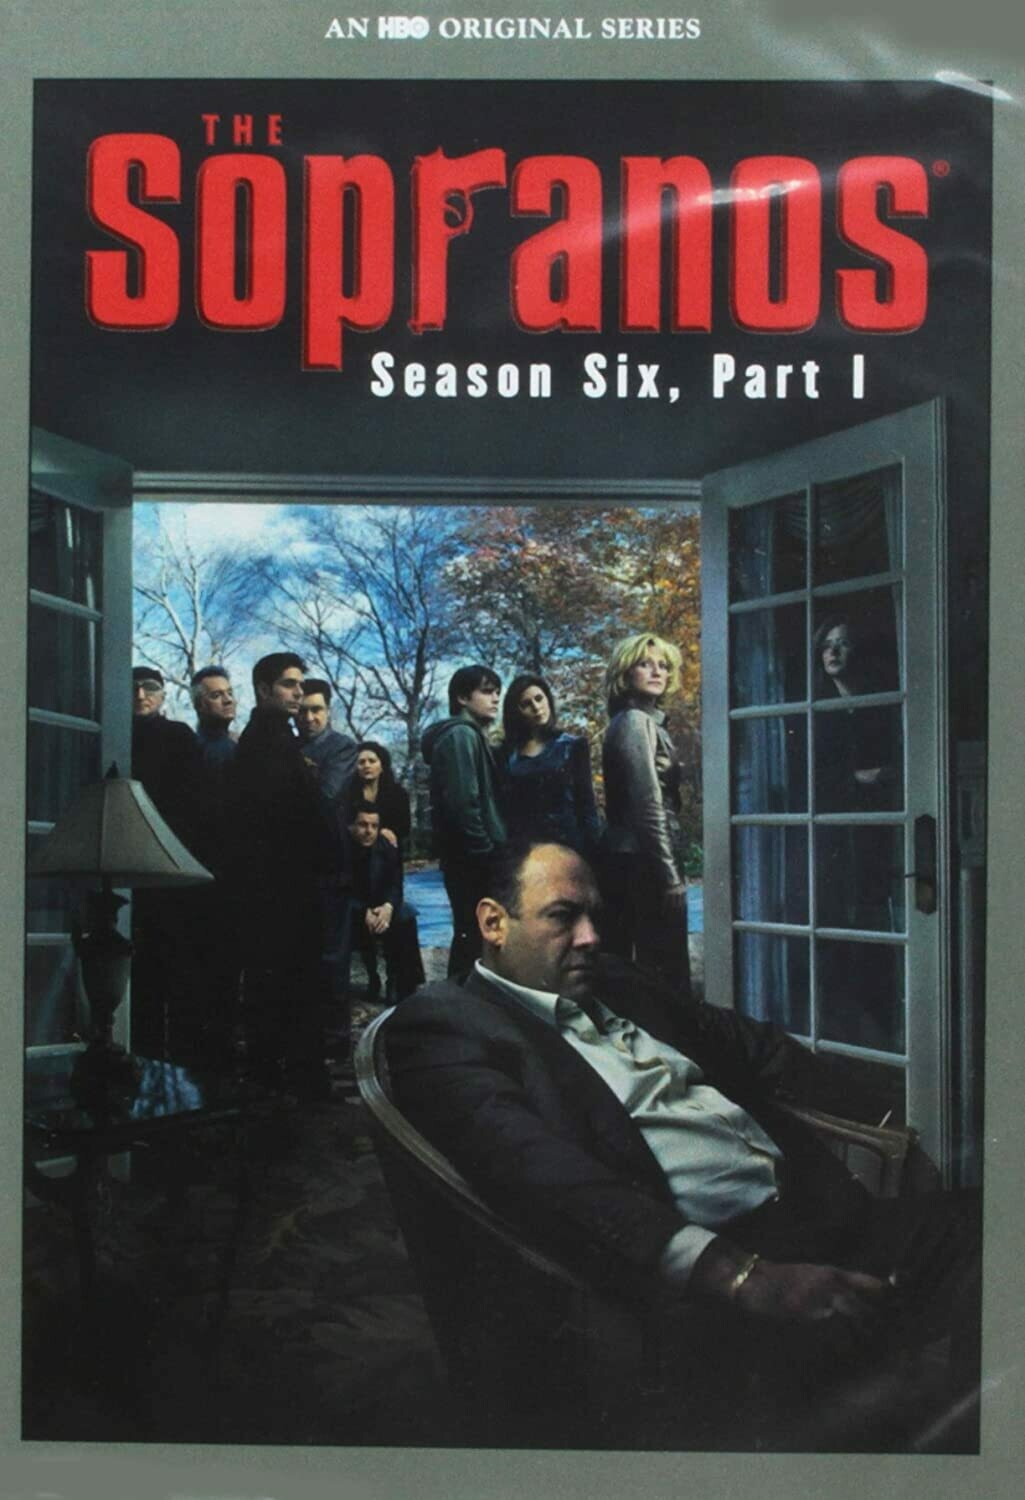 Sopranos Season Six Part One (7 day rental)